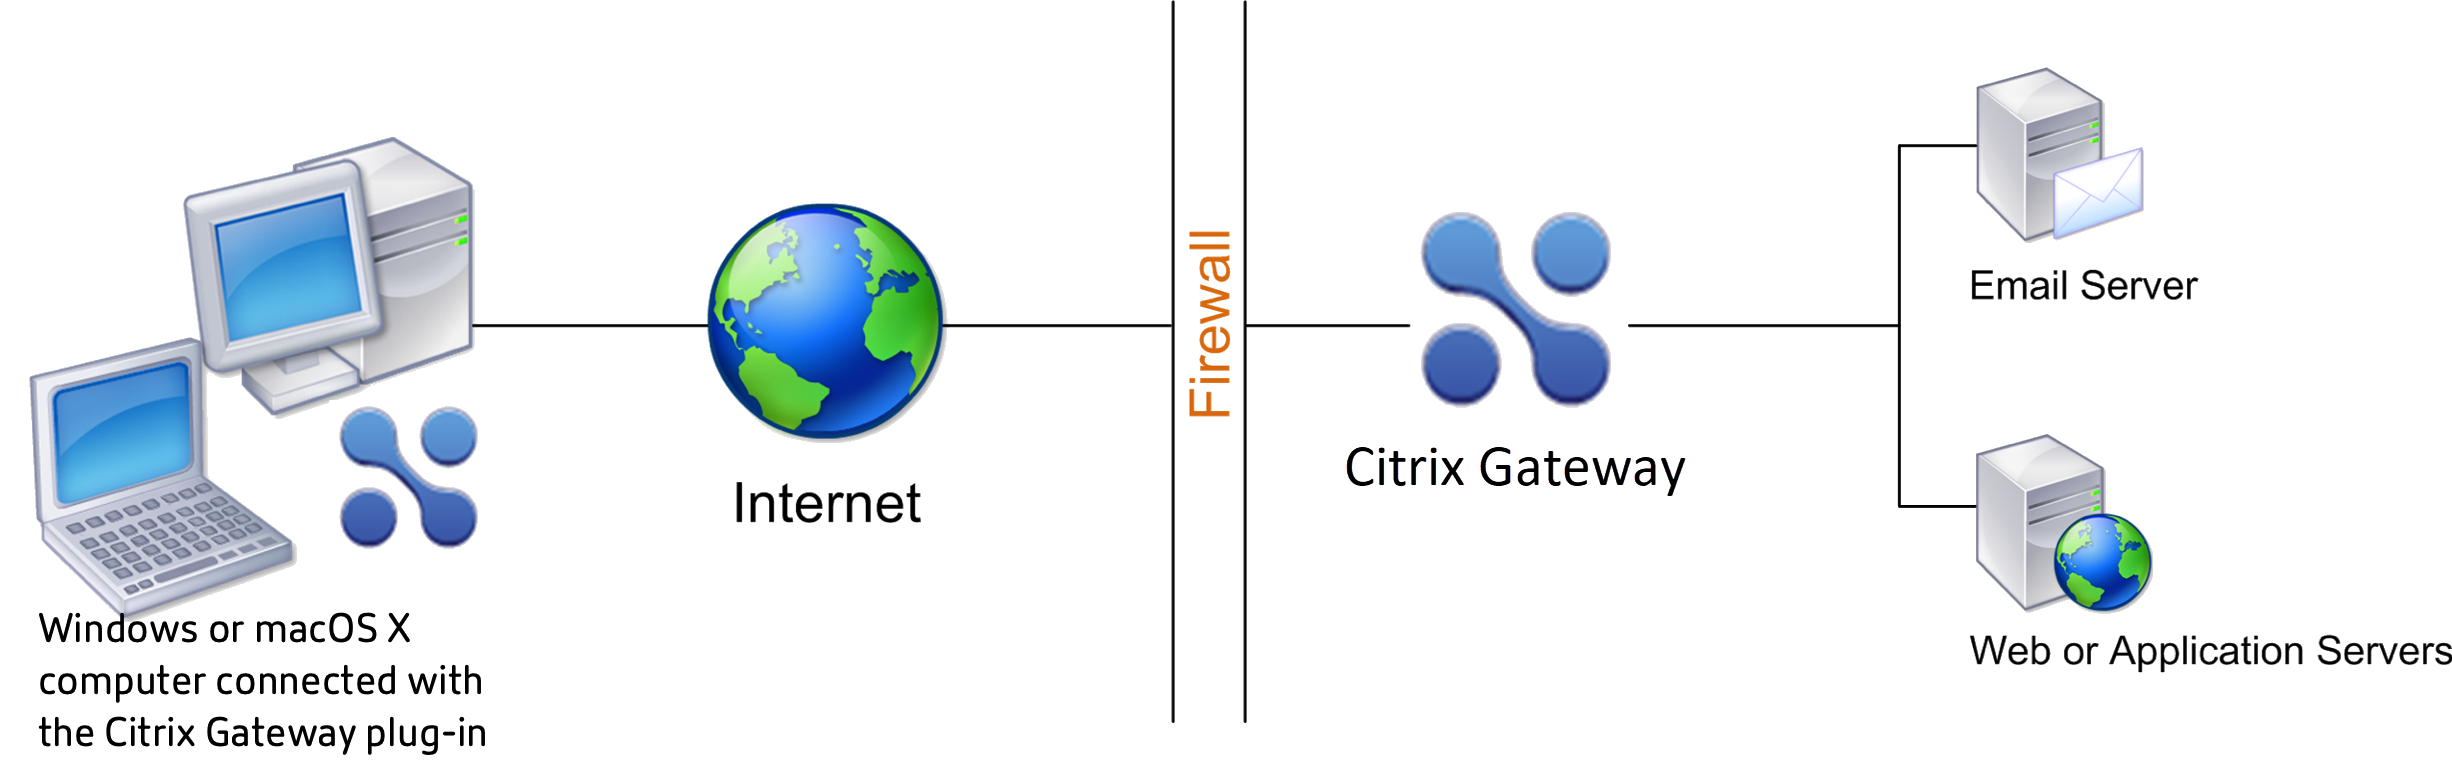 Deploy Citrix Gateway in Secure Network